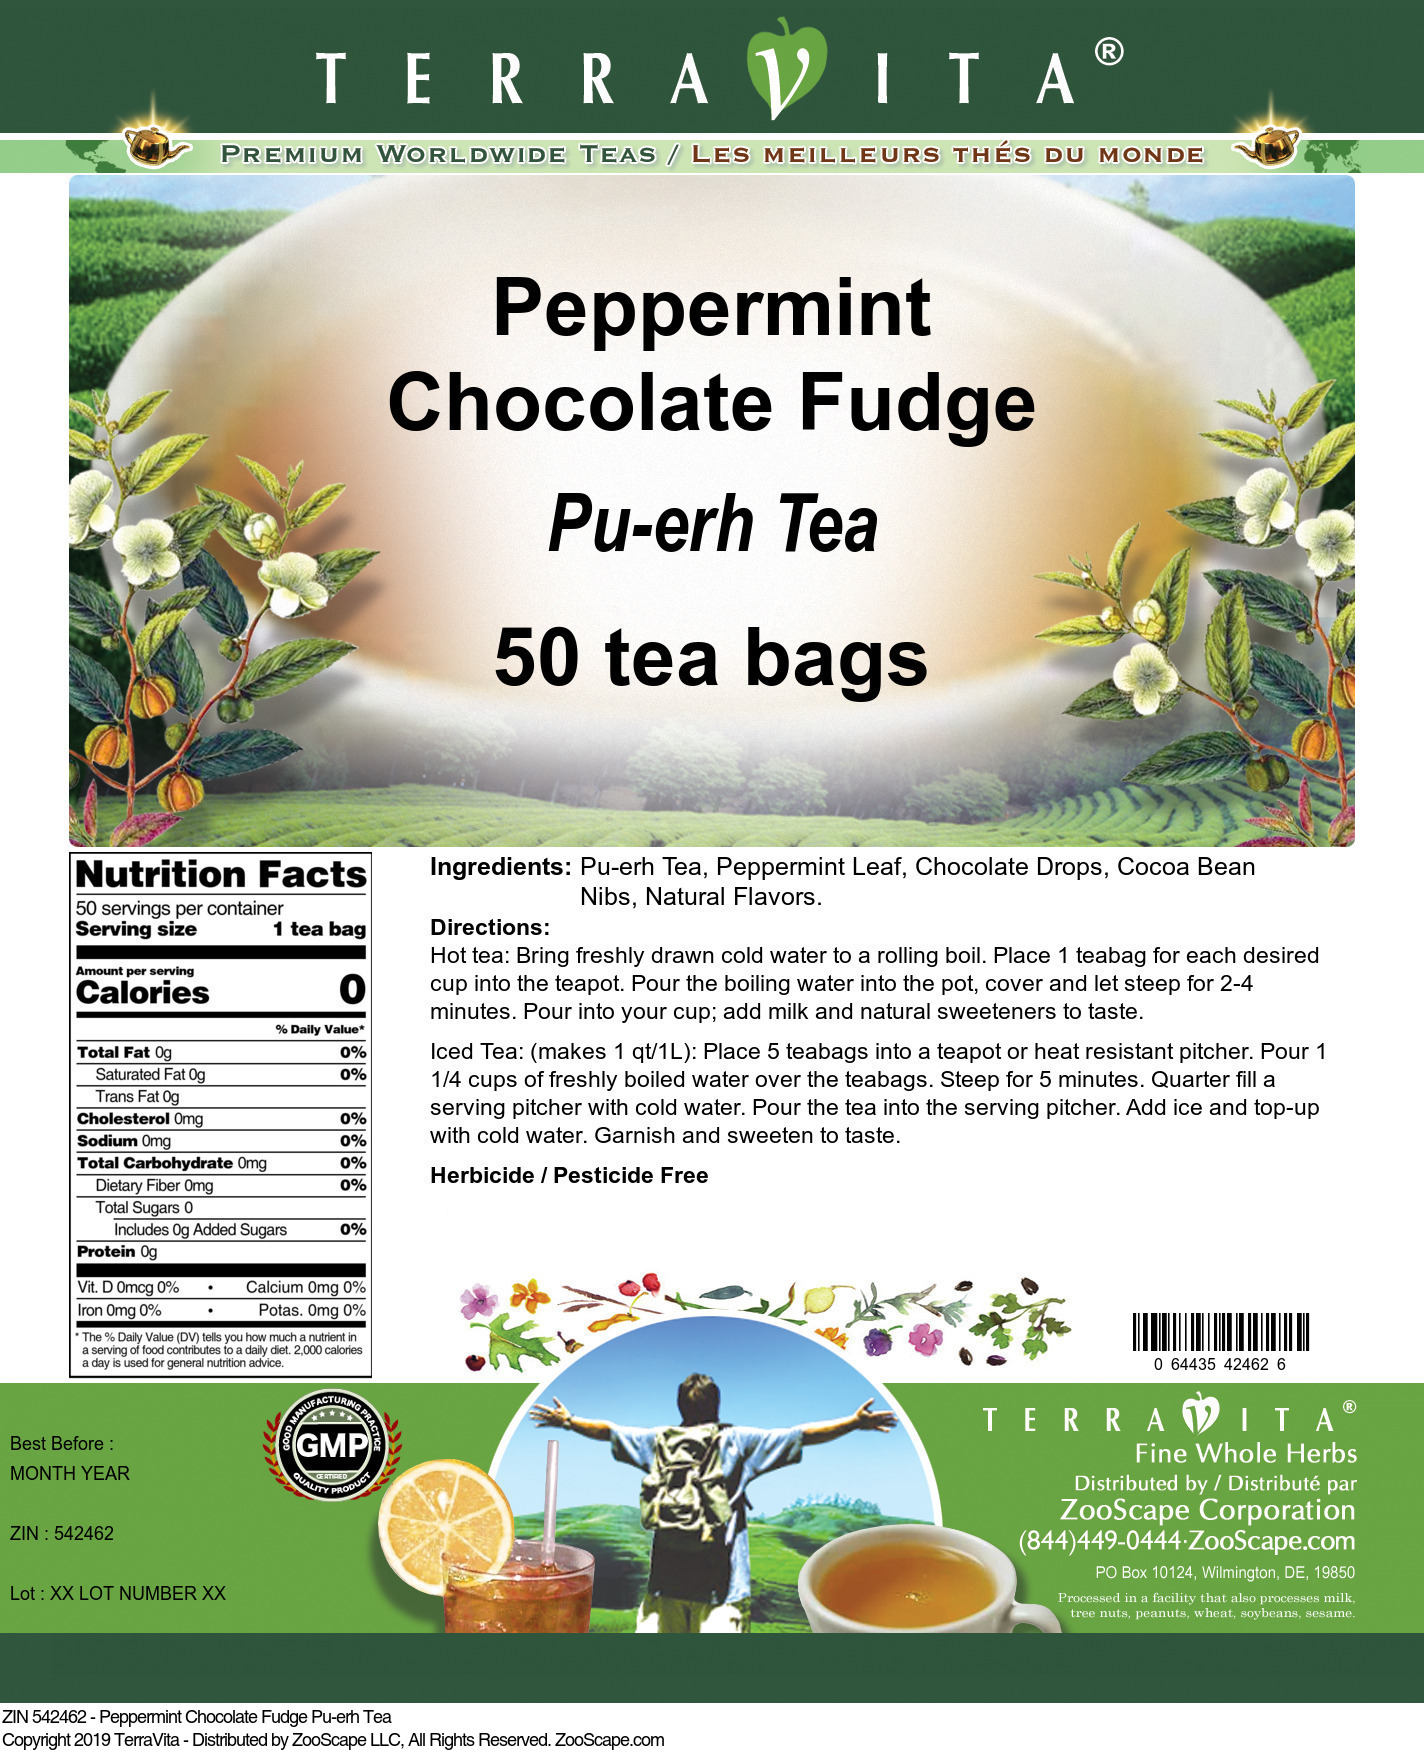 Peppermint Chocolate Fudge Pu-erh Tea - Label